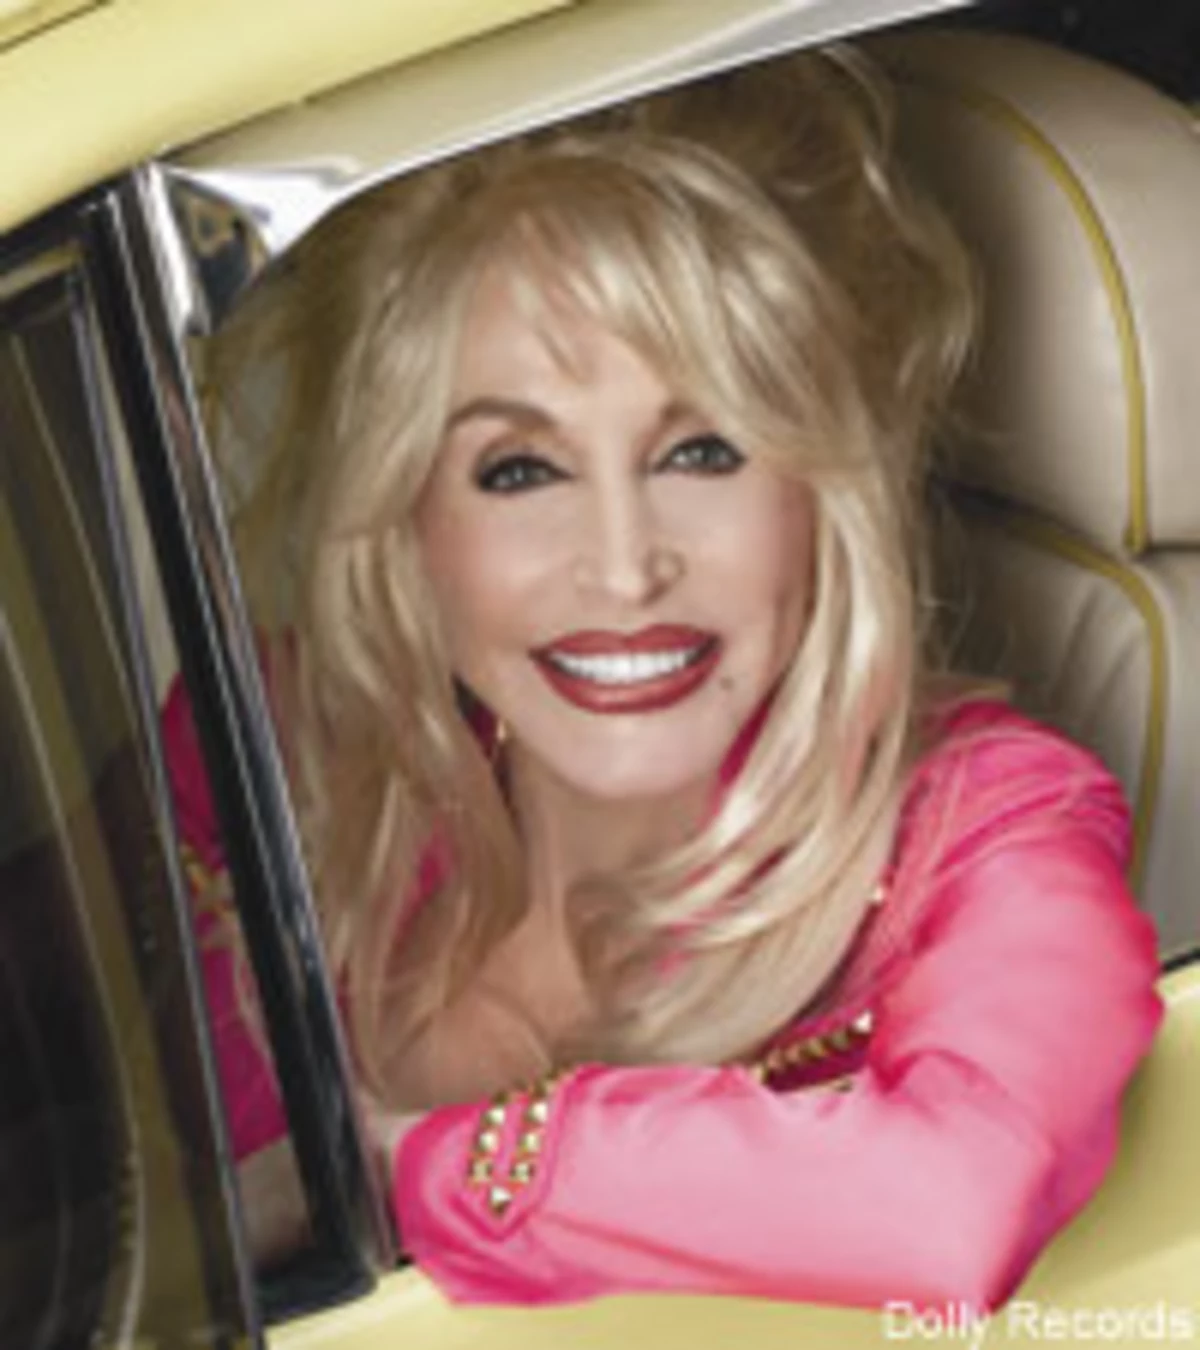 Dolly Parton Goes 'Backwoods' on New Album